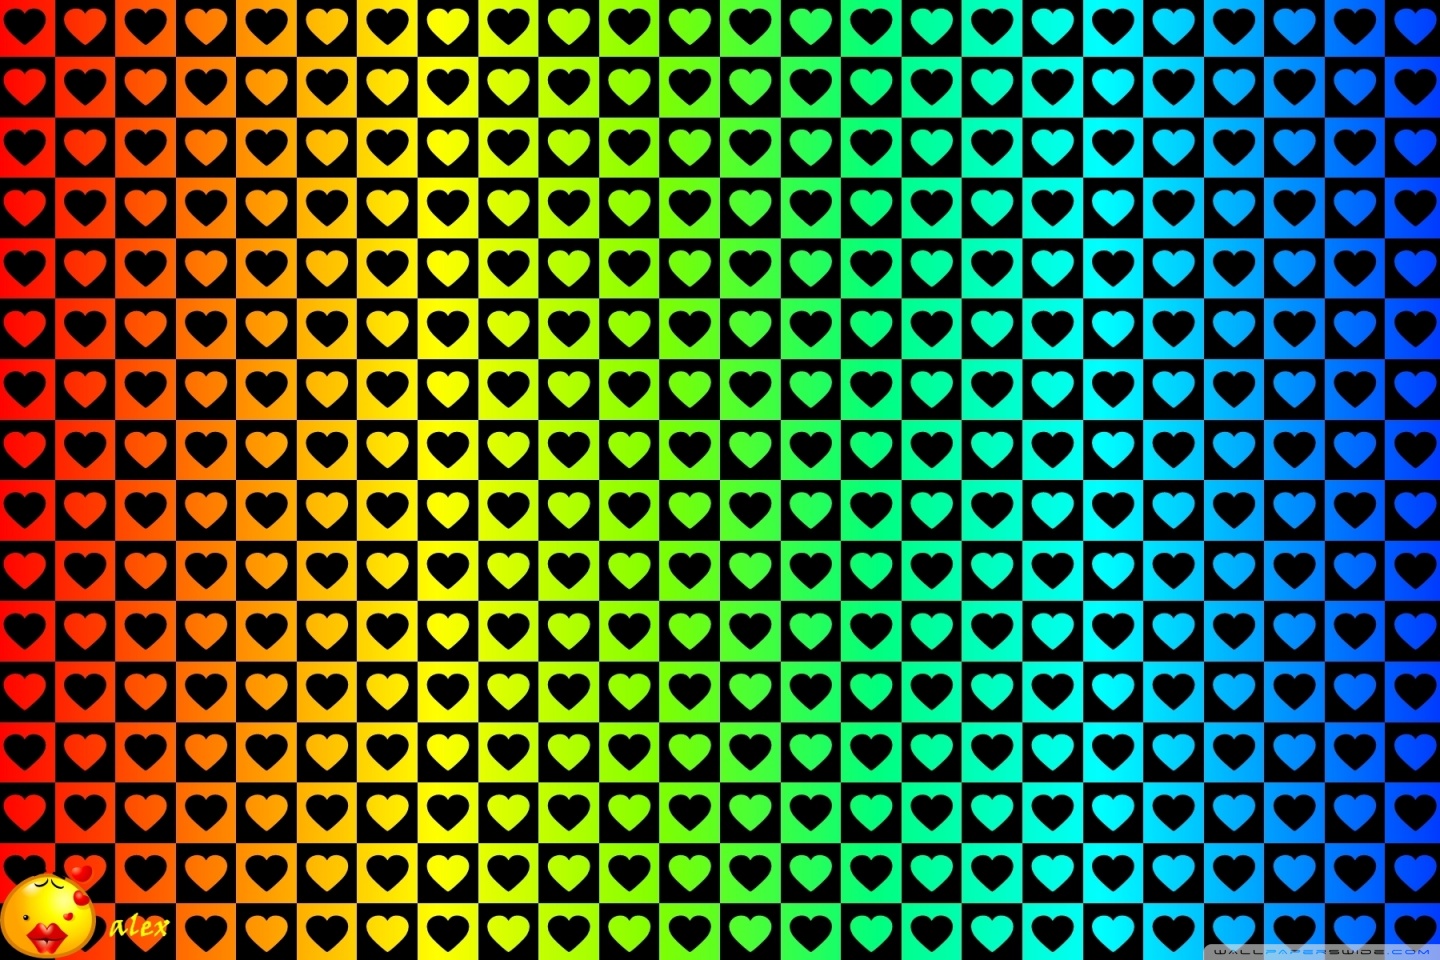 Colorful Hearts Background Ultra Hd Desktop Background Wallpaper